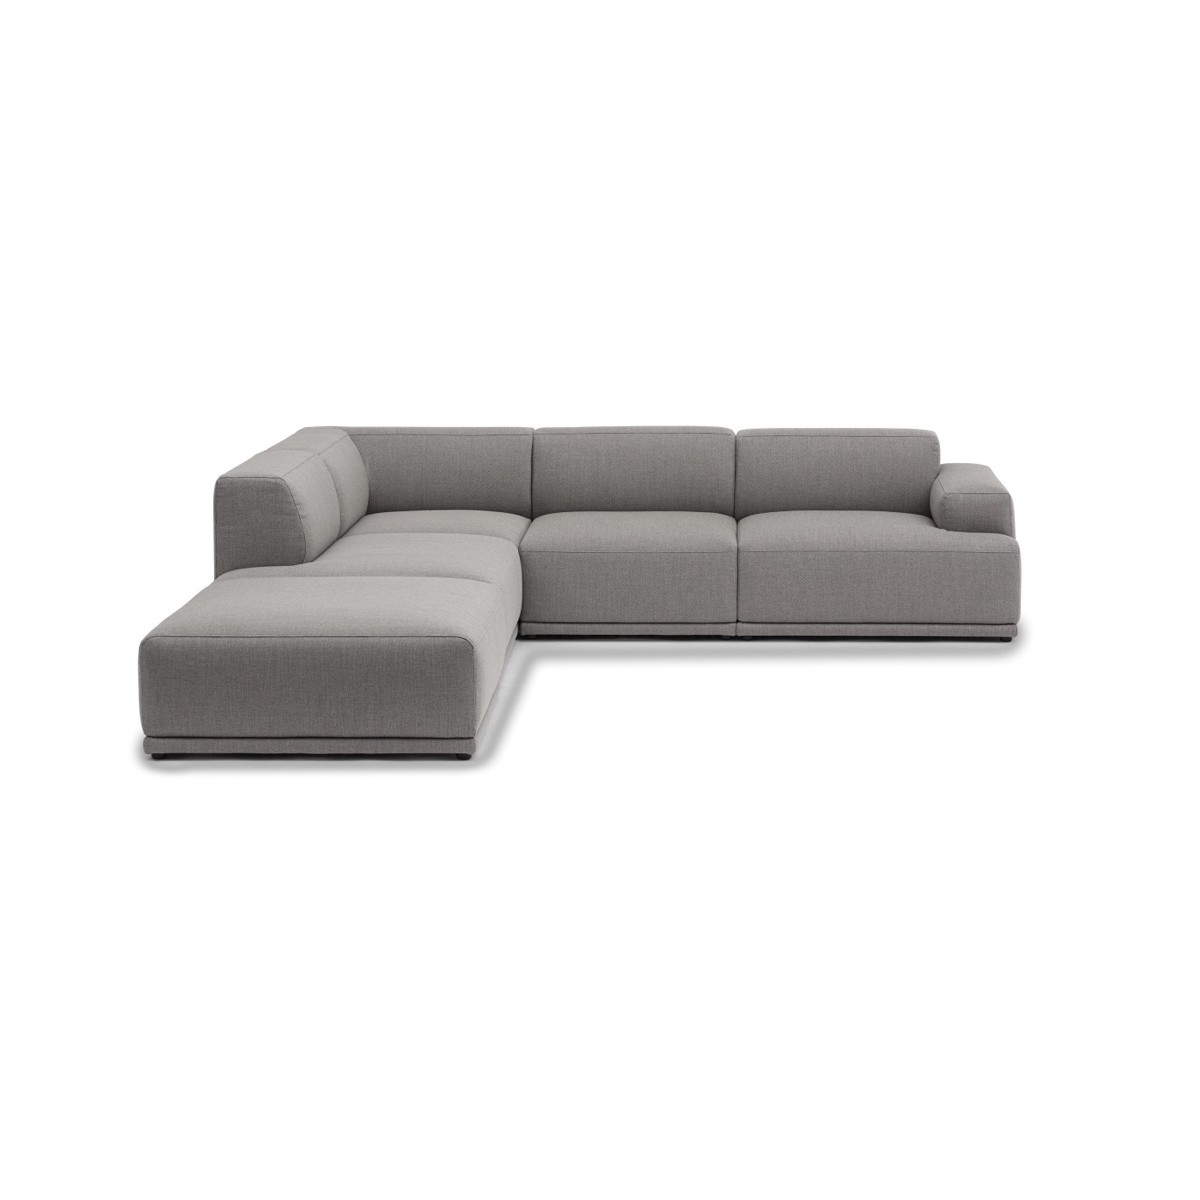 Connect Soft - corner sofa, Configuration 1 - Re-Wool 128 fabric